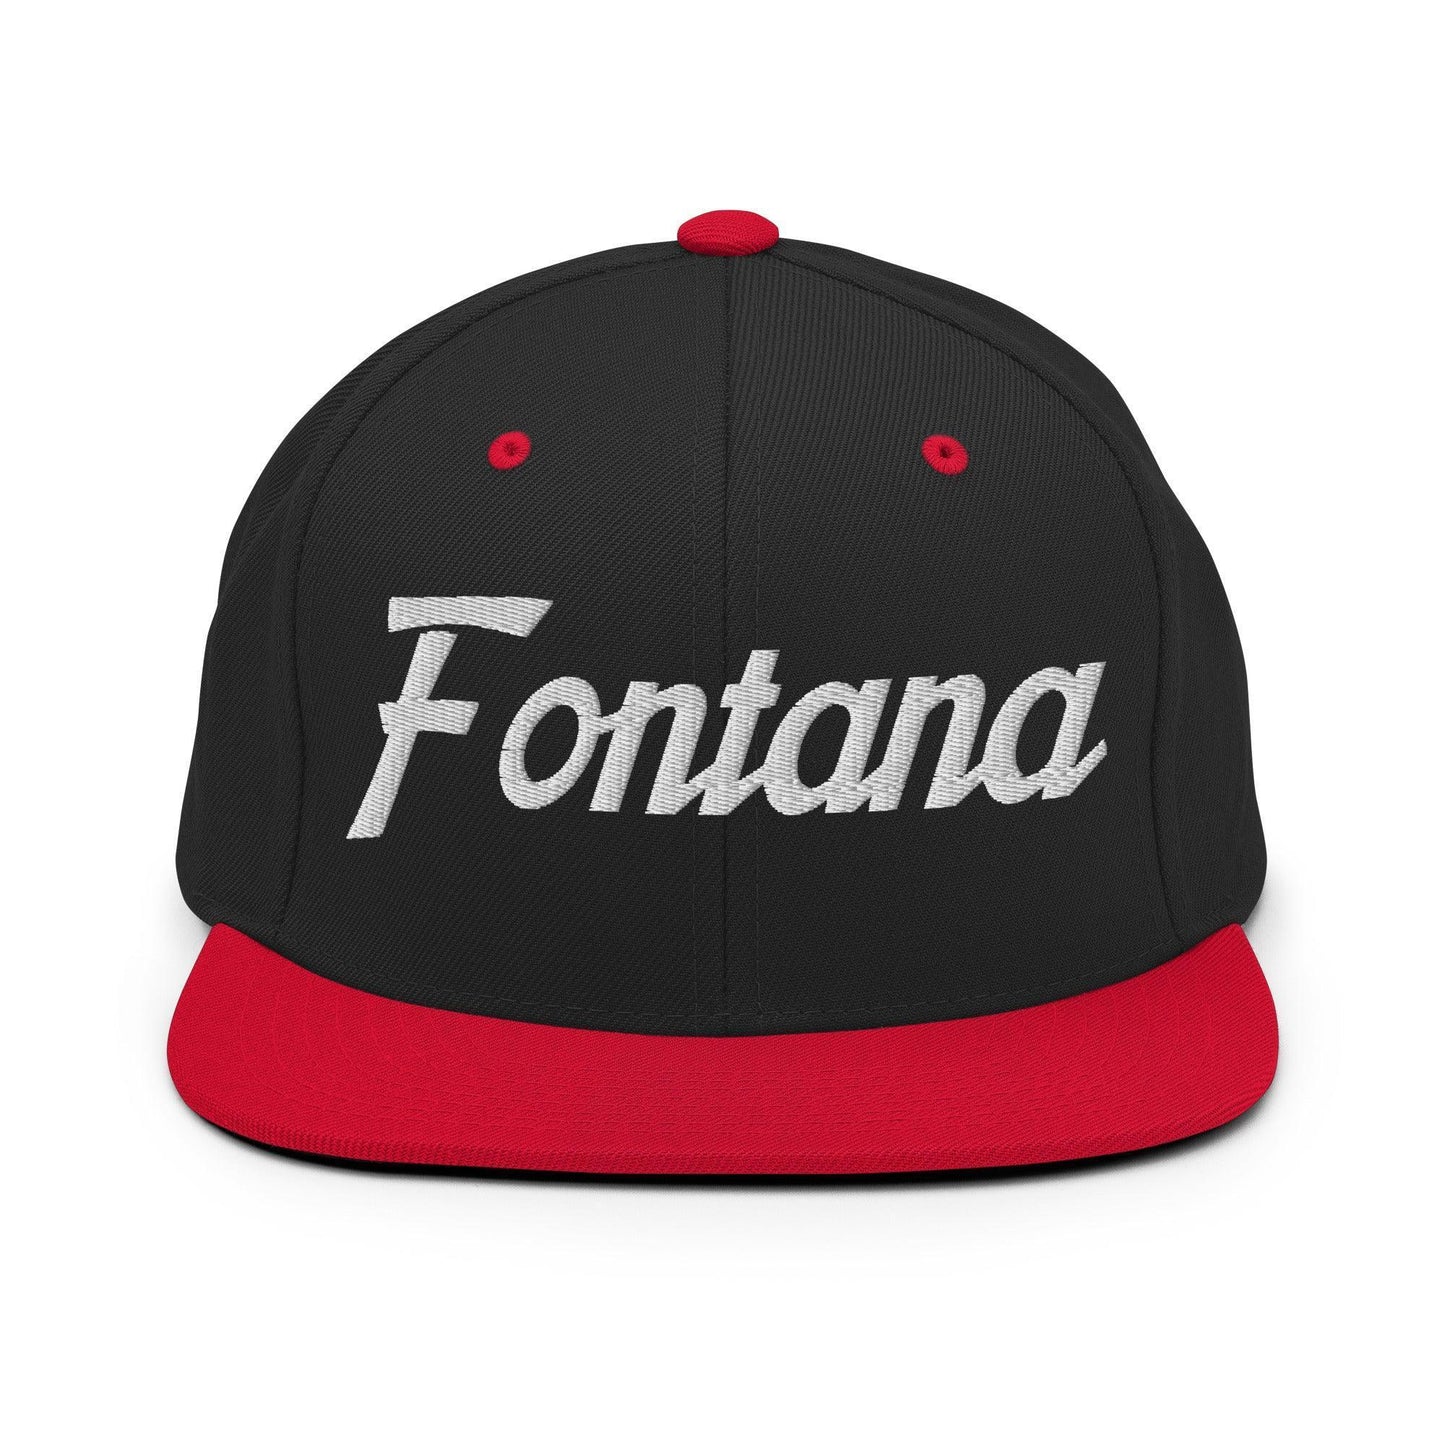 Fontana Script Snapback Hat Black Red